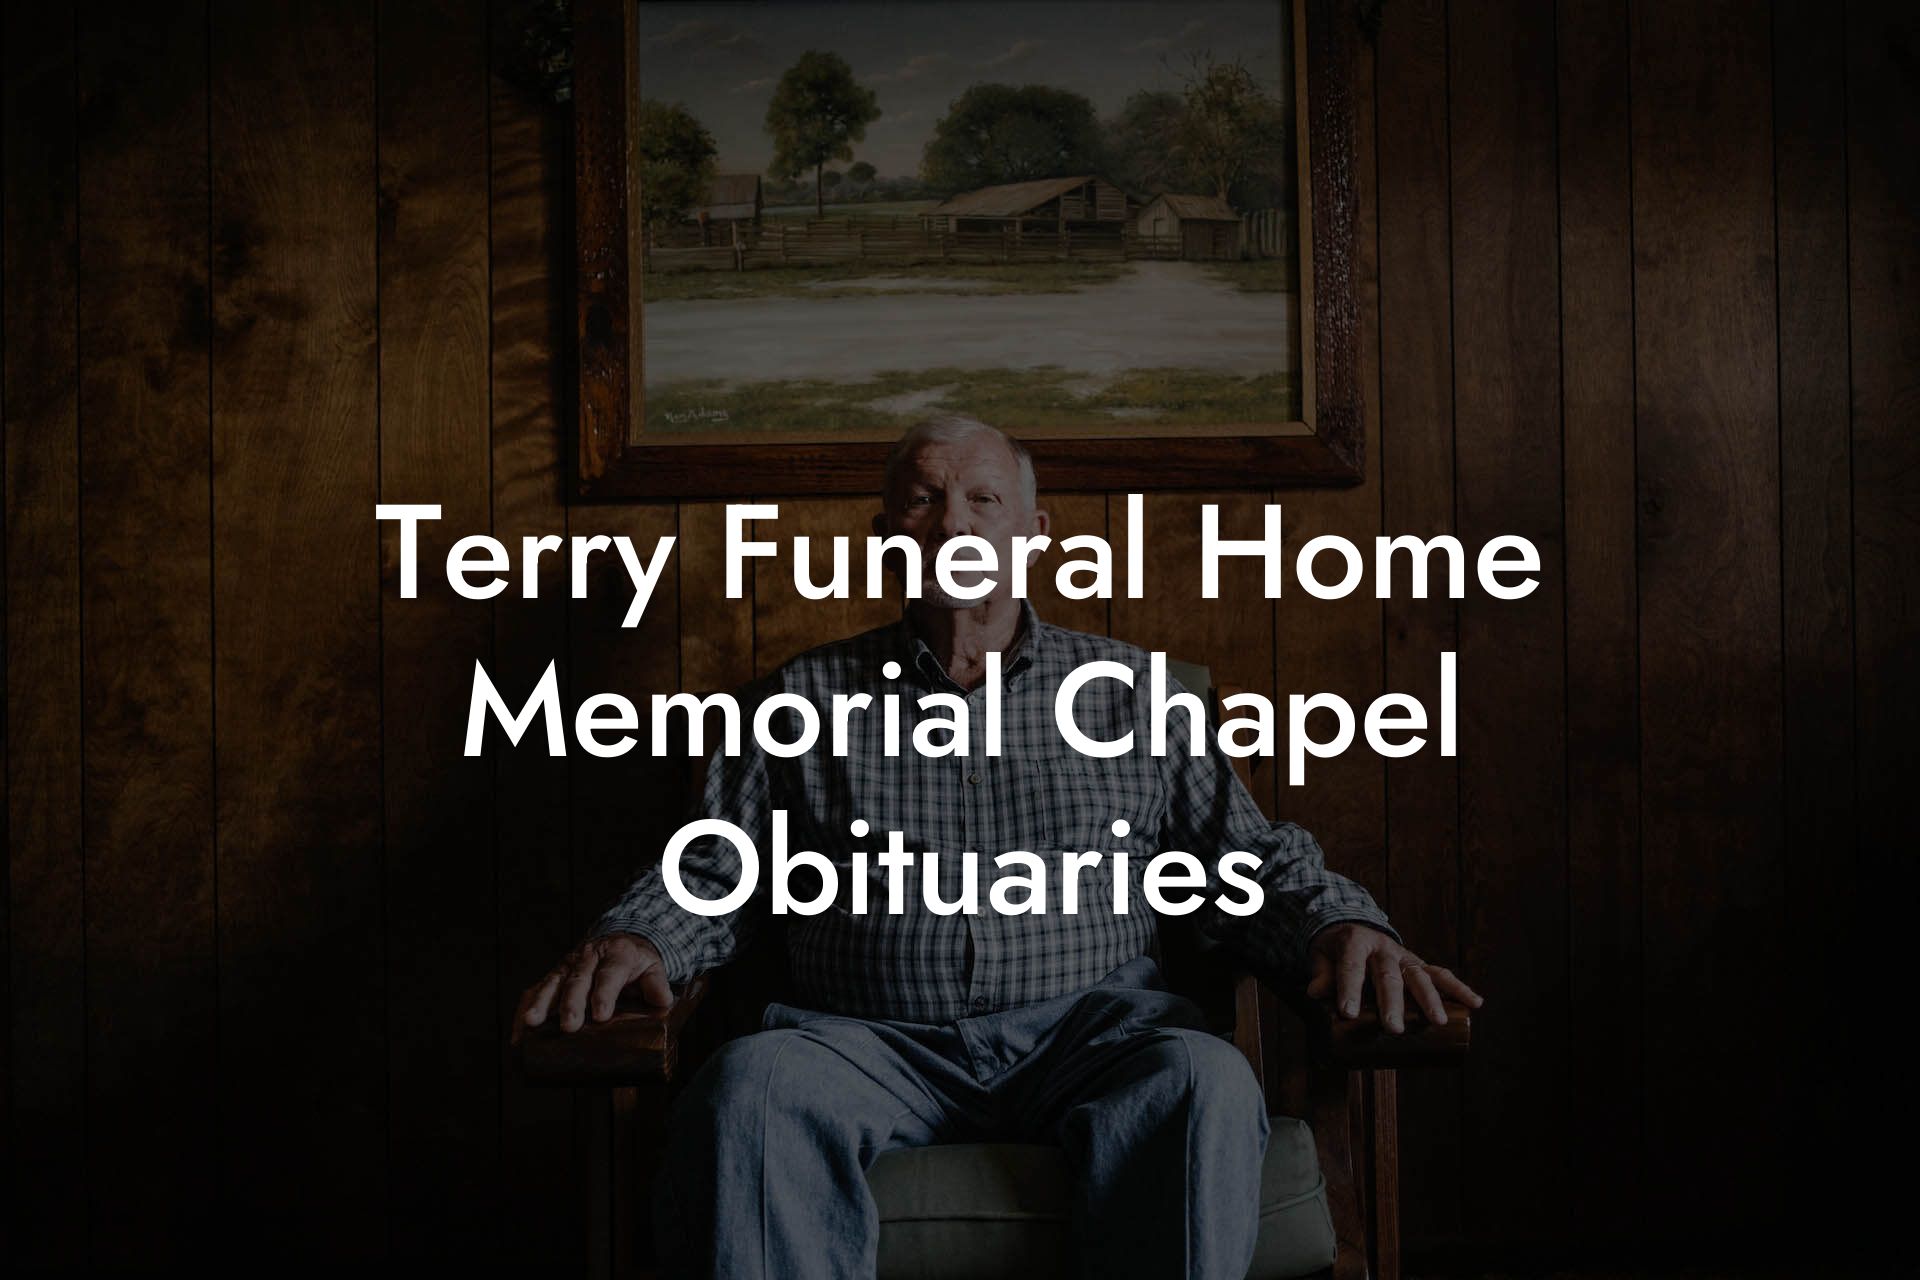 Terry Funeral Home Memorial Chapel Obituaries